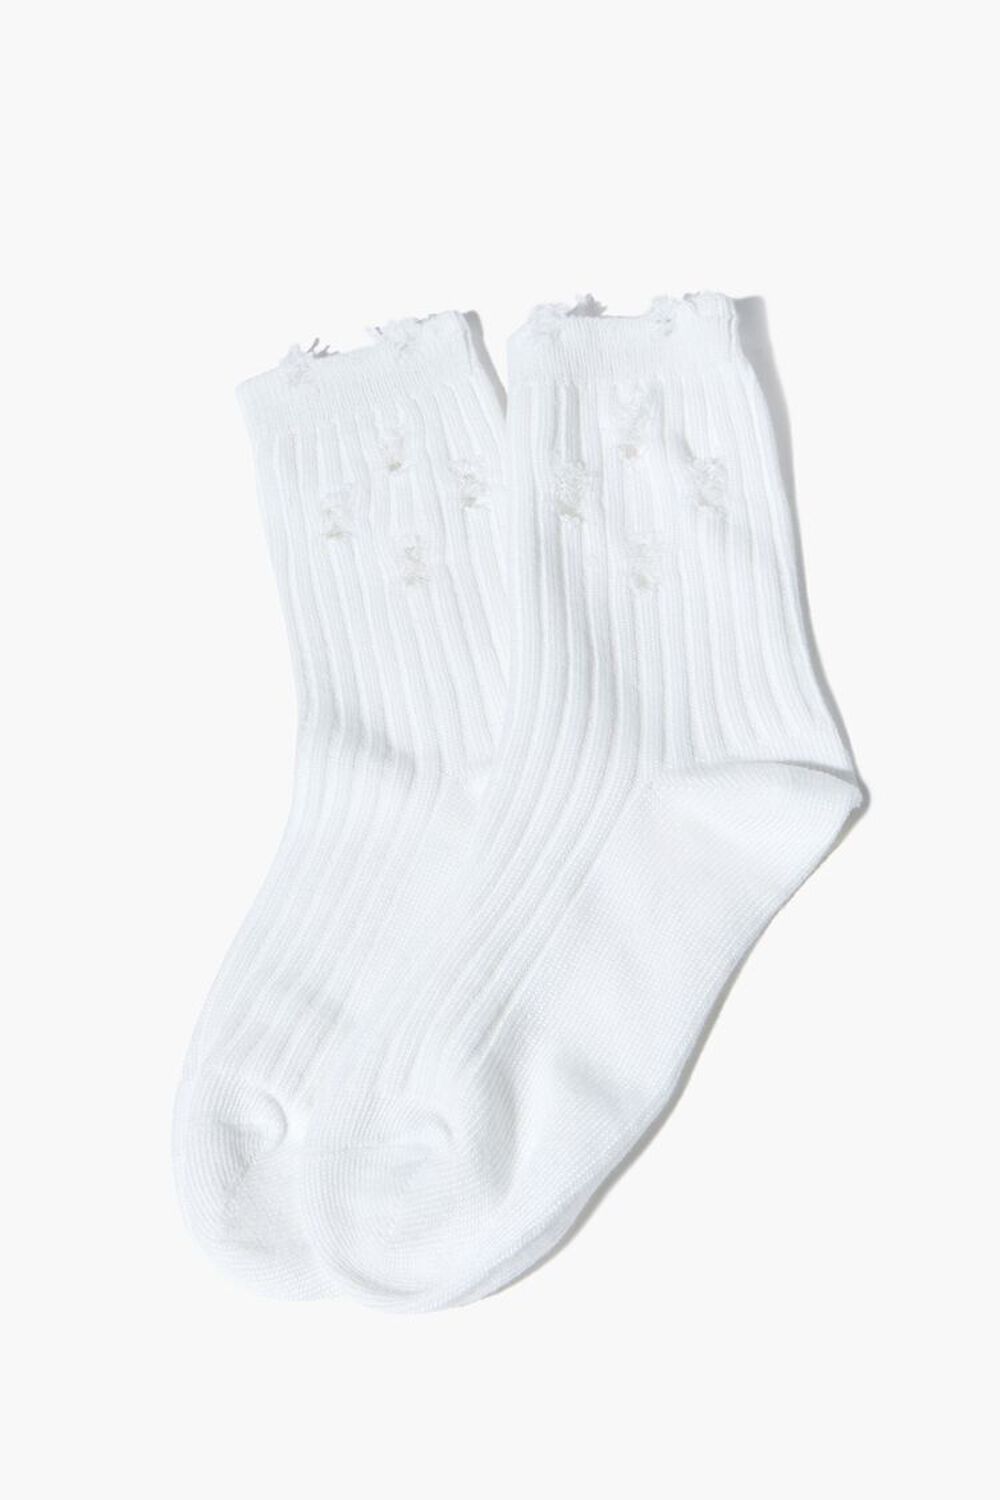 WHITE Distressed Crew Socks, image 2